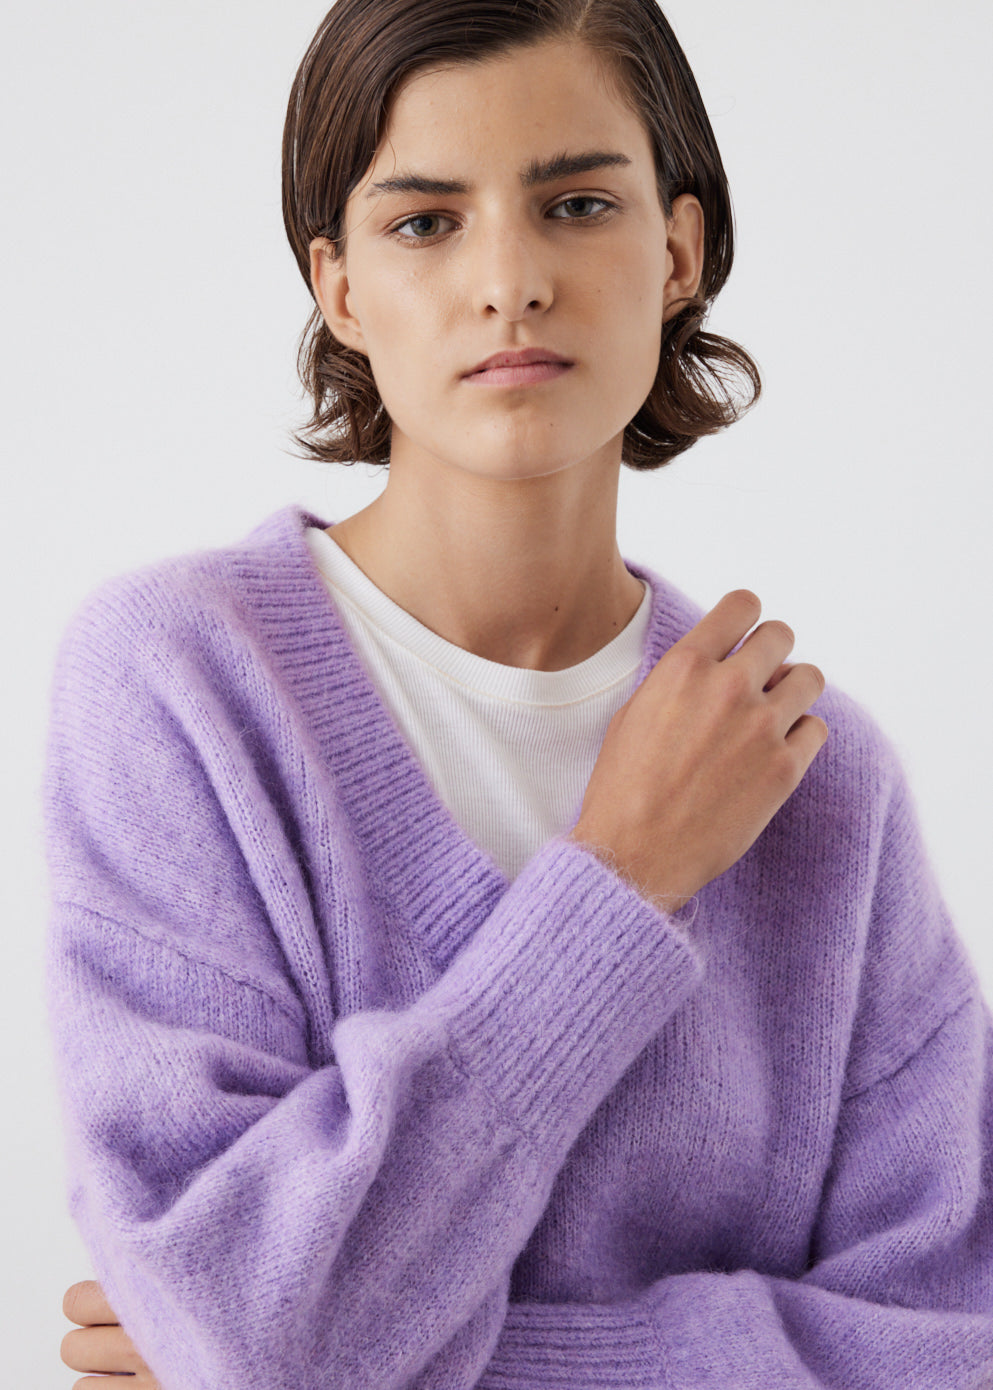 Jameela Knit Sweater